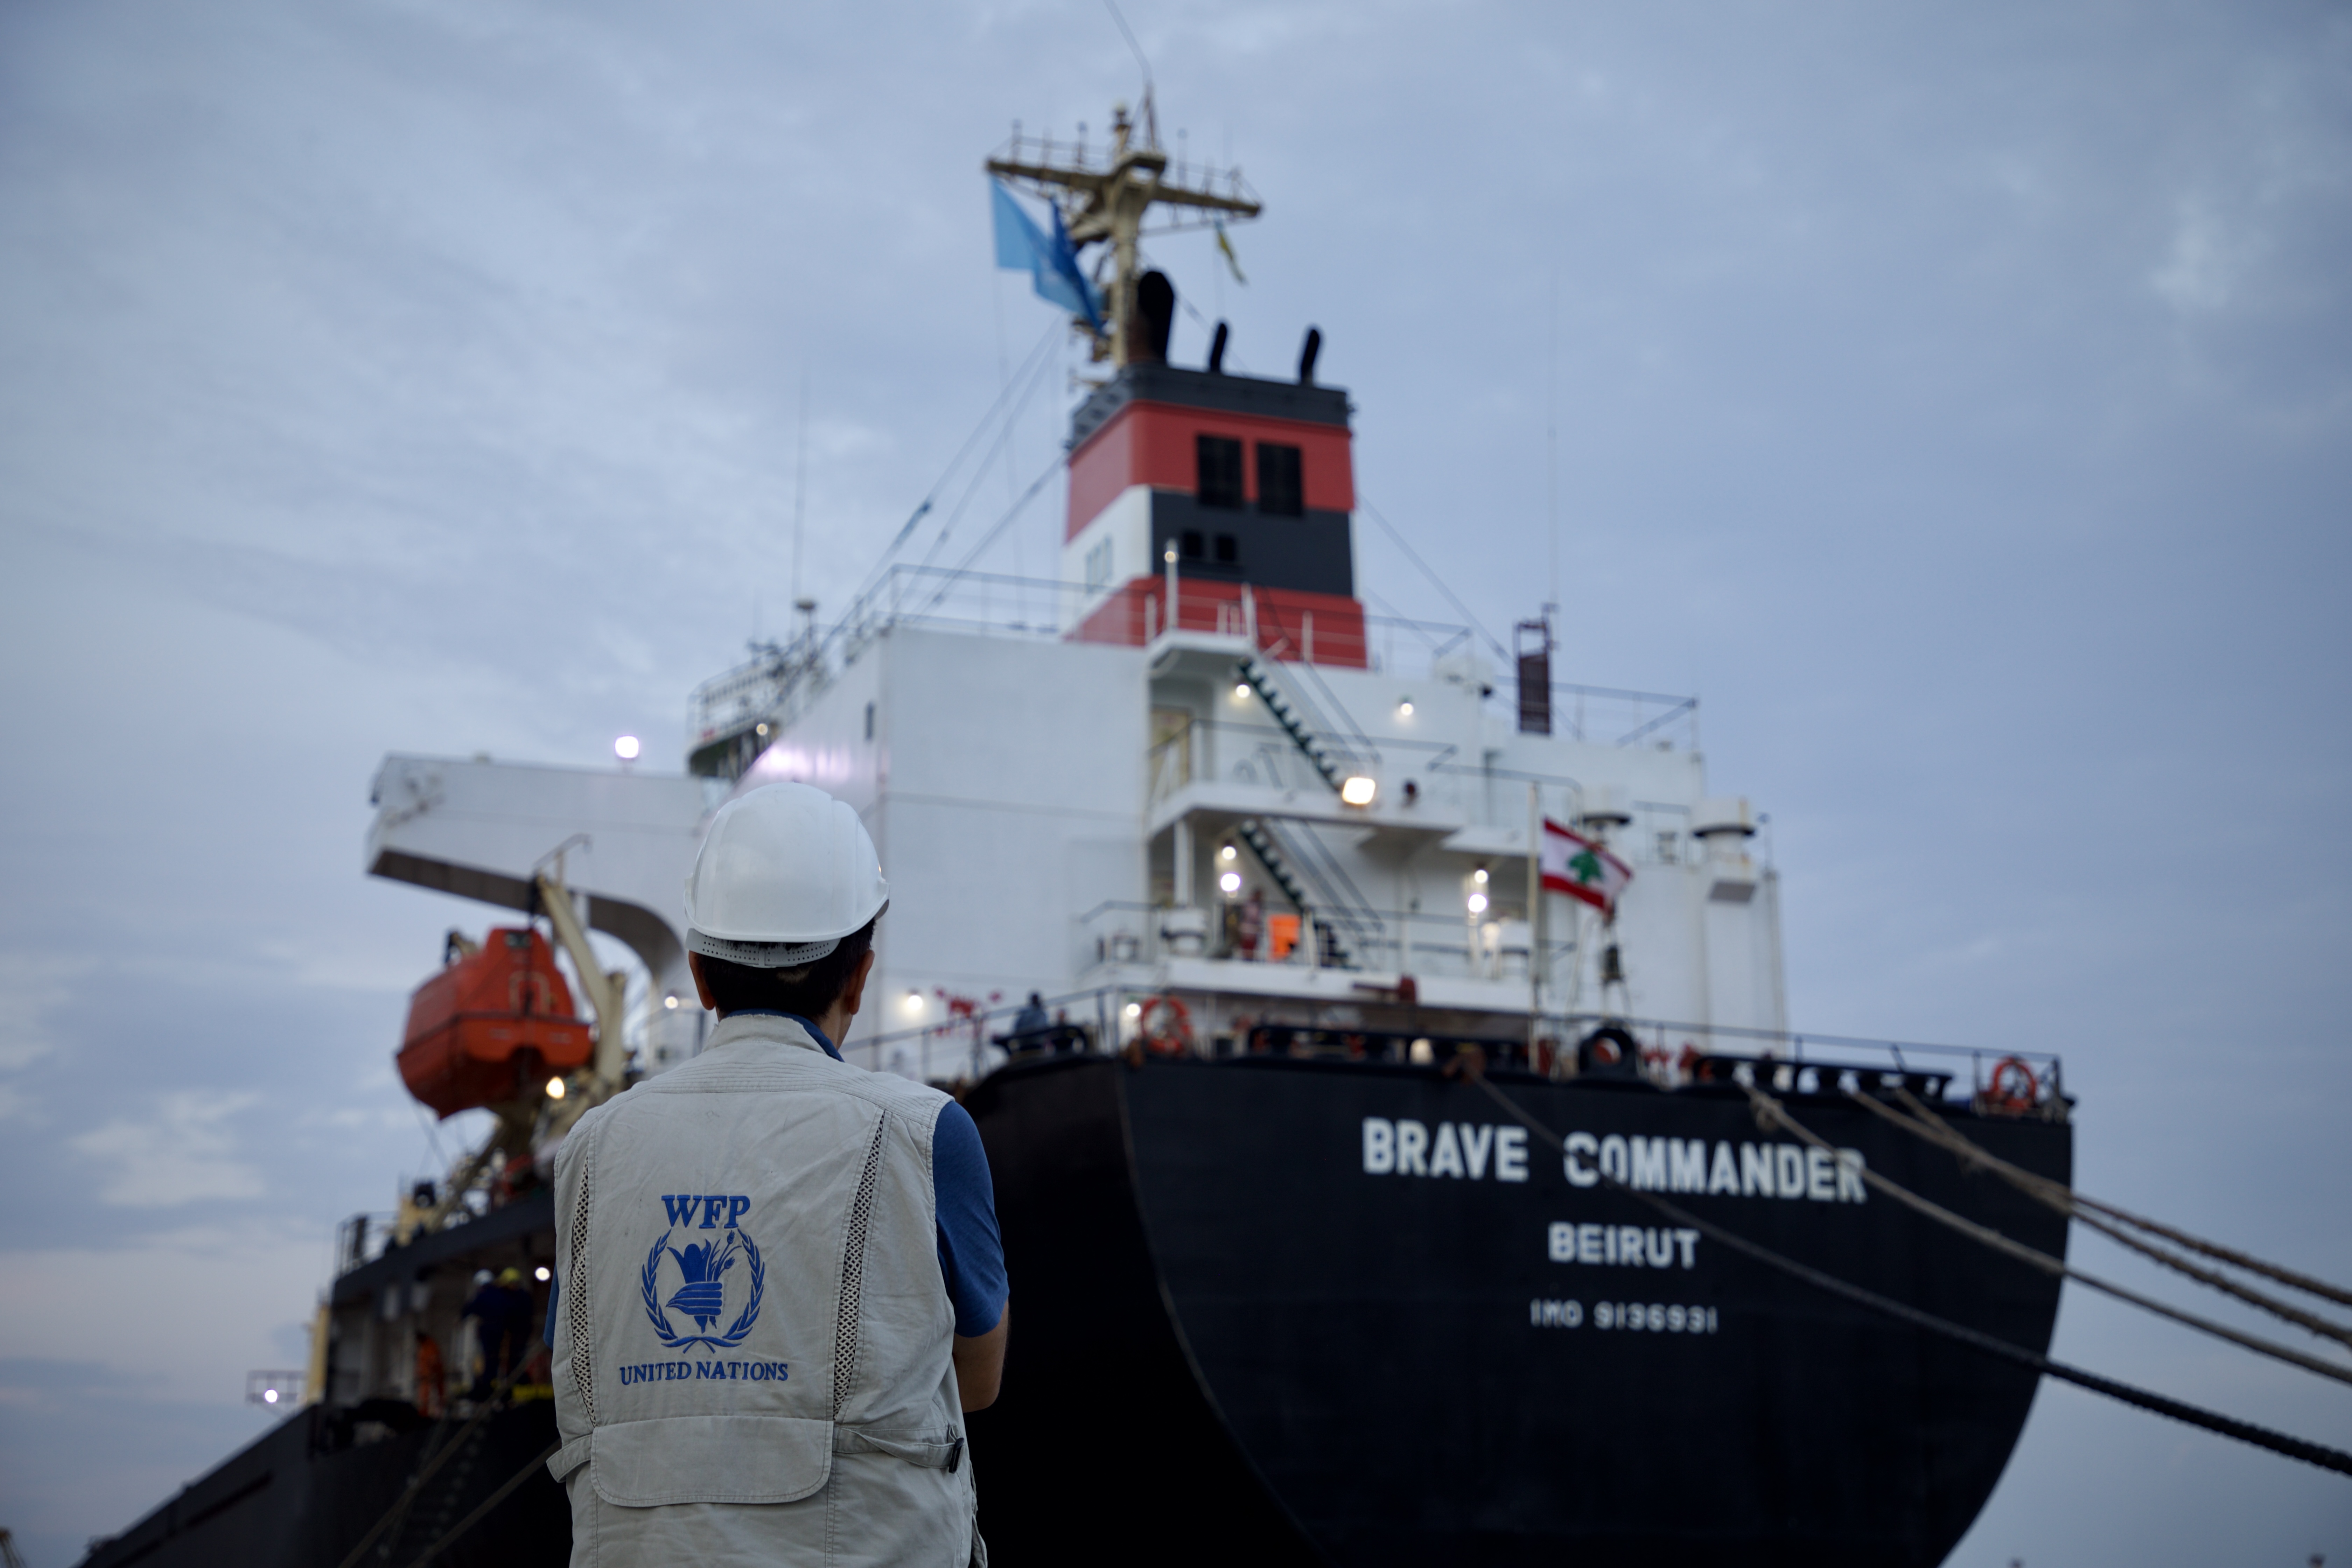 Ukraine. WFP loads its first vessel "Brave Commander" in Pivdennyi port, Odesa 